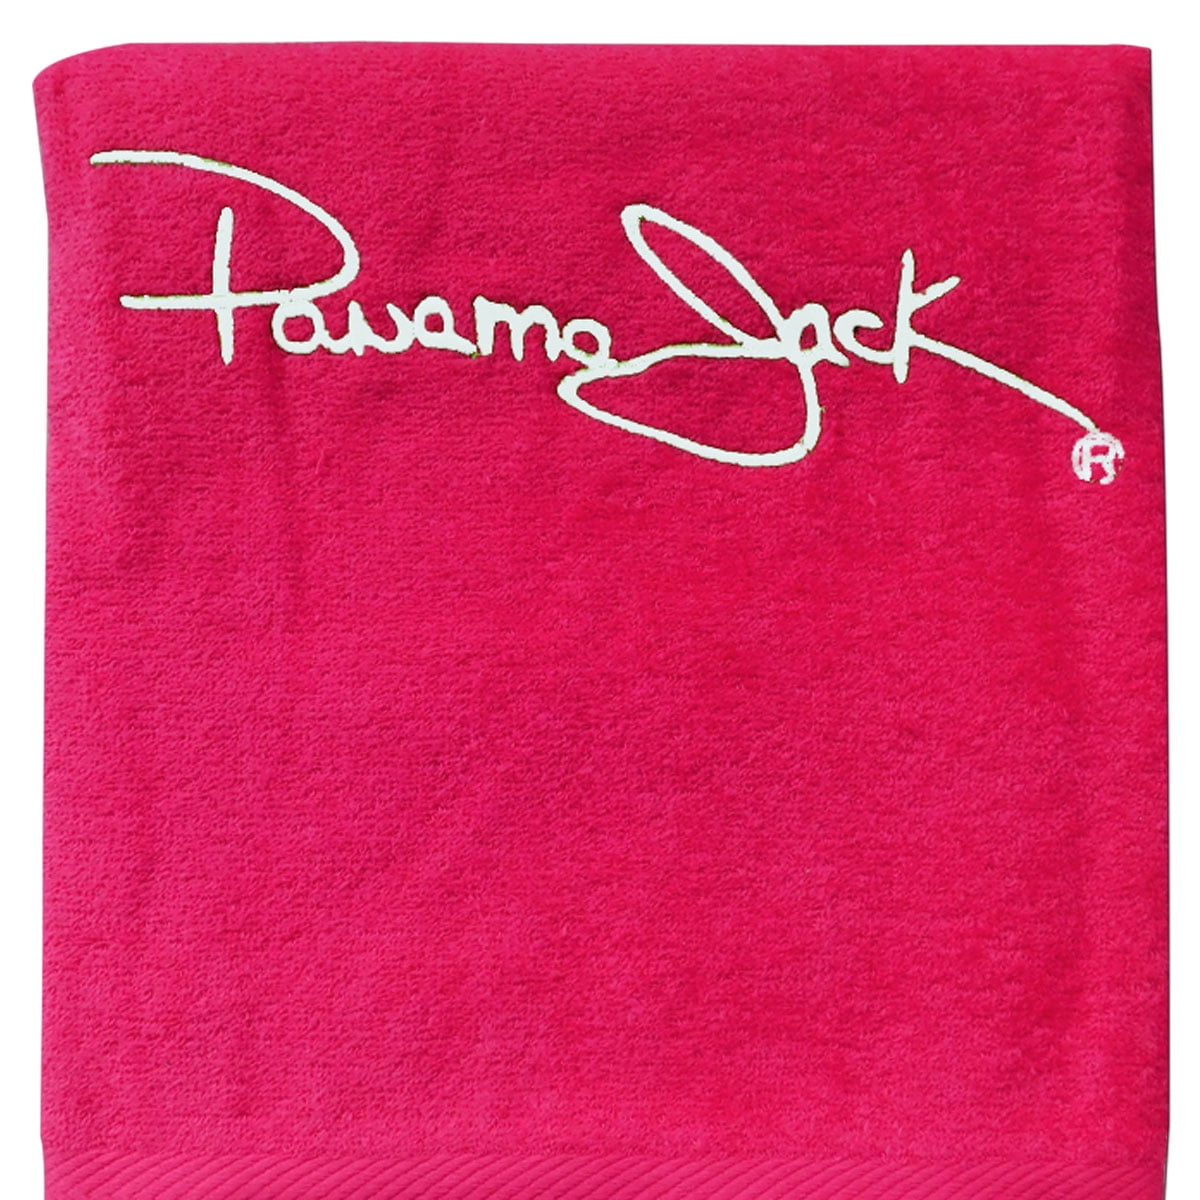 Panama Jack Embroidered Signature Logo Large Beach Towel - Walmart.com ...